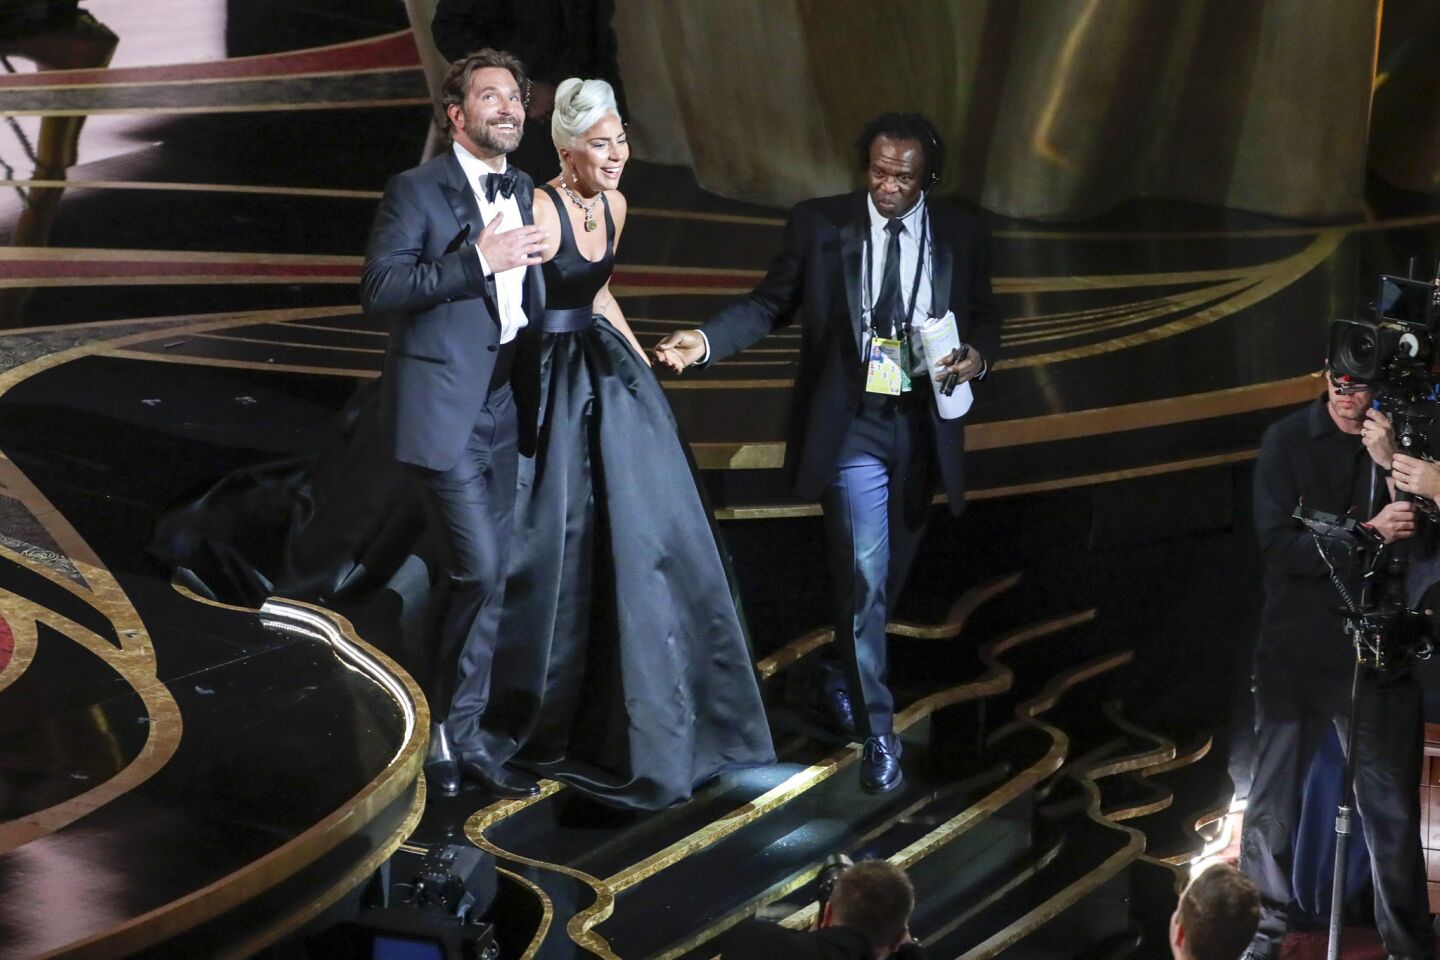 Oscars 2019 | Awards ceremony